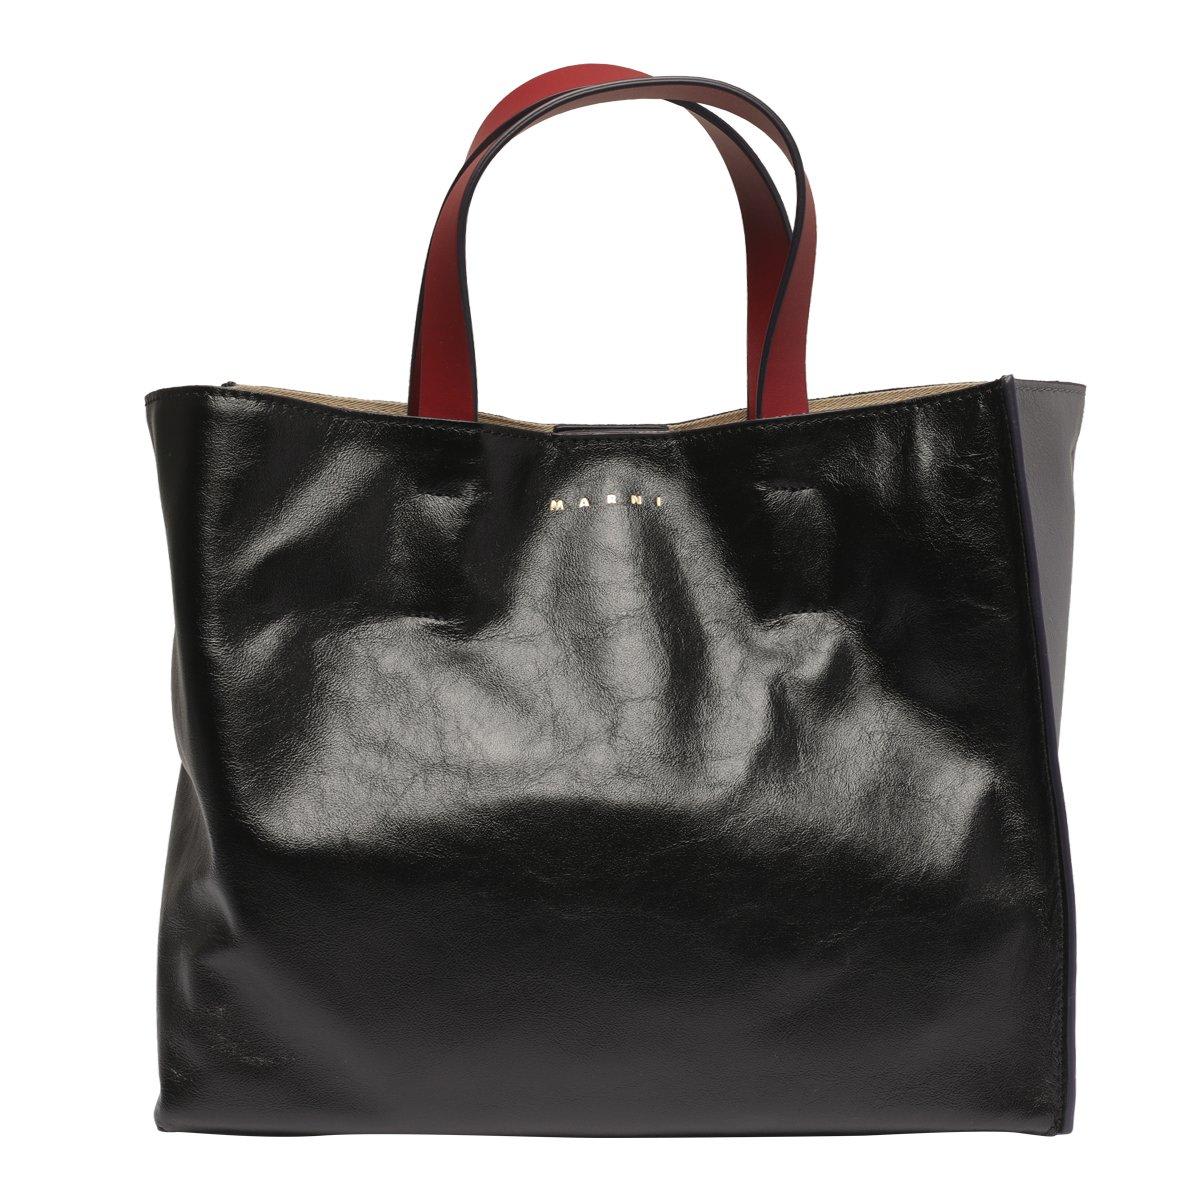 Marni Two-Toned Tote Bag